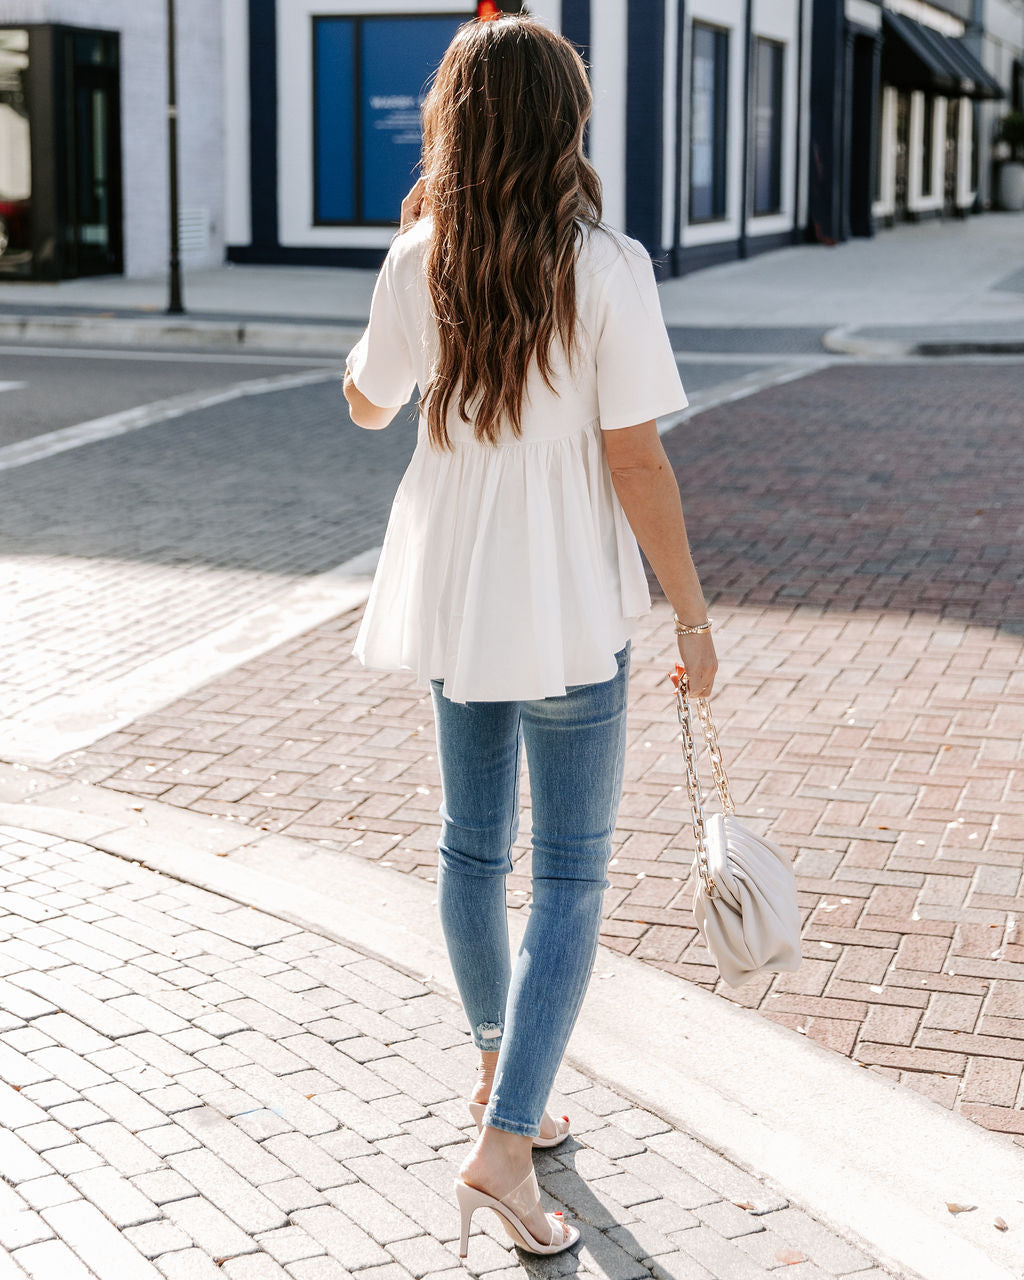 Lanora Short Sleeve High Low Knit Top - White